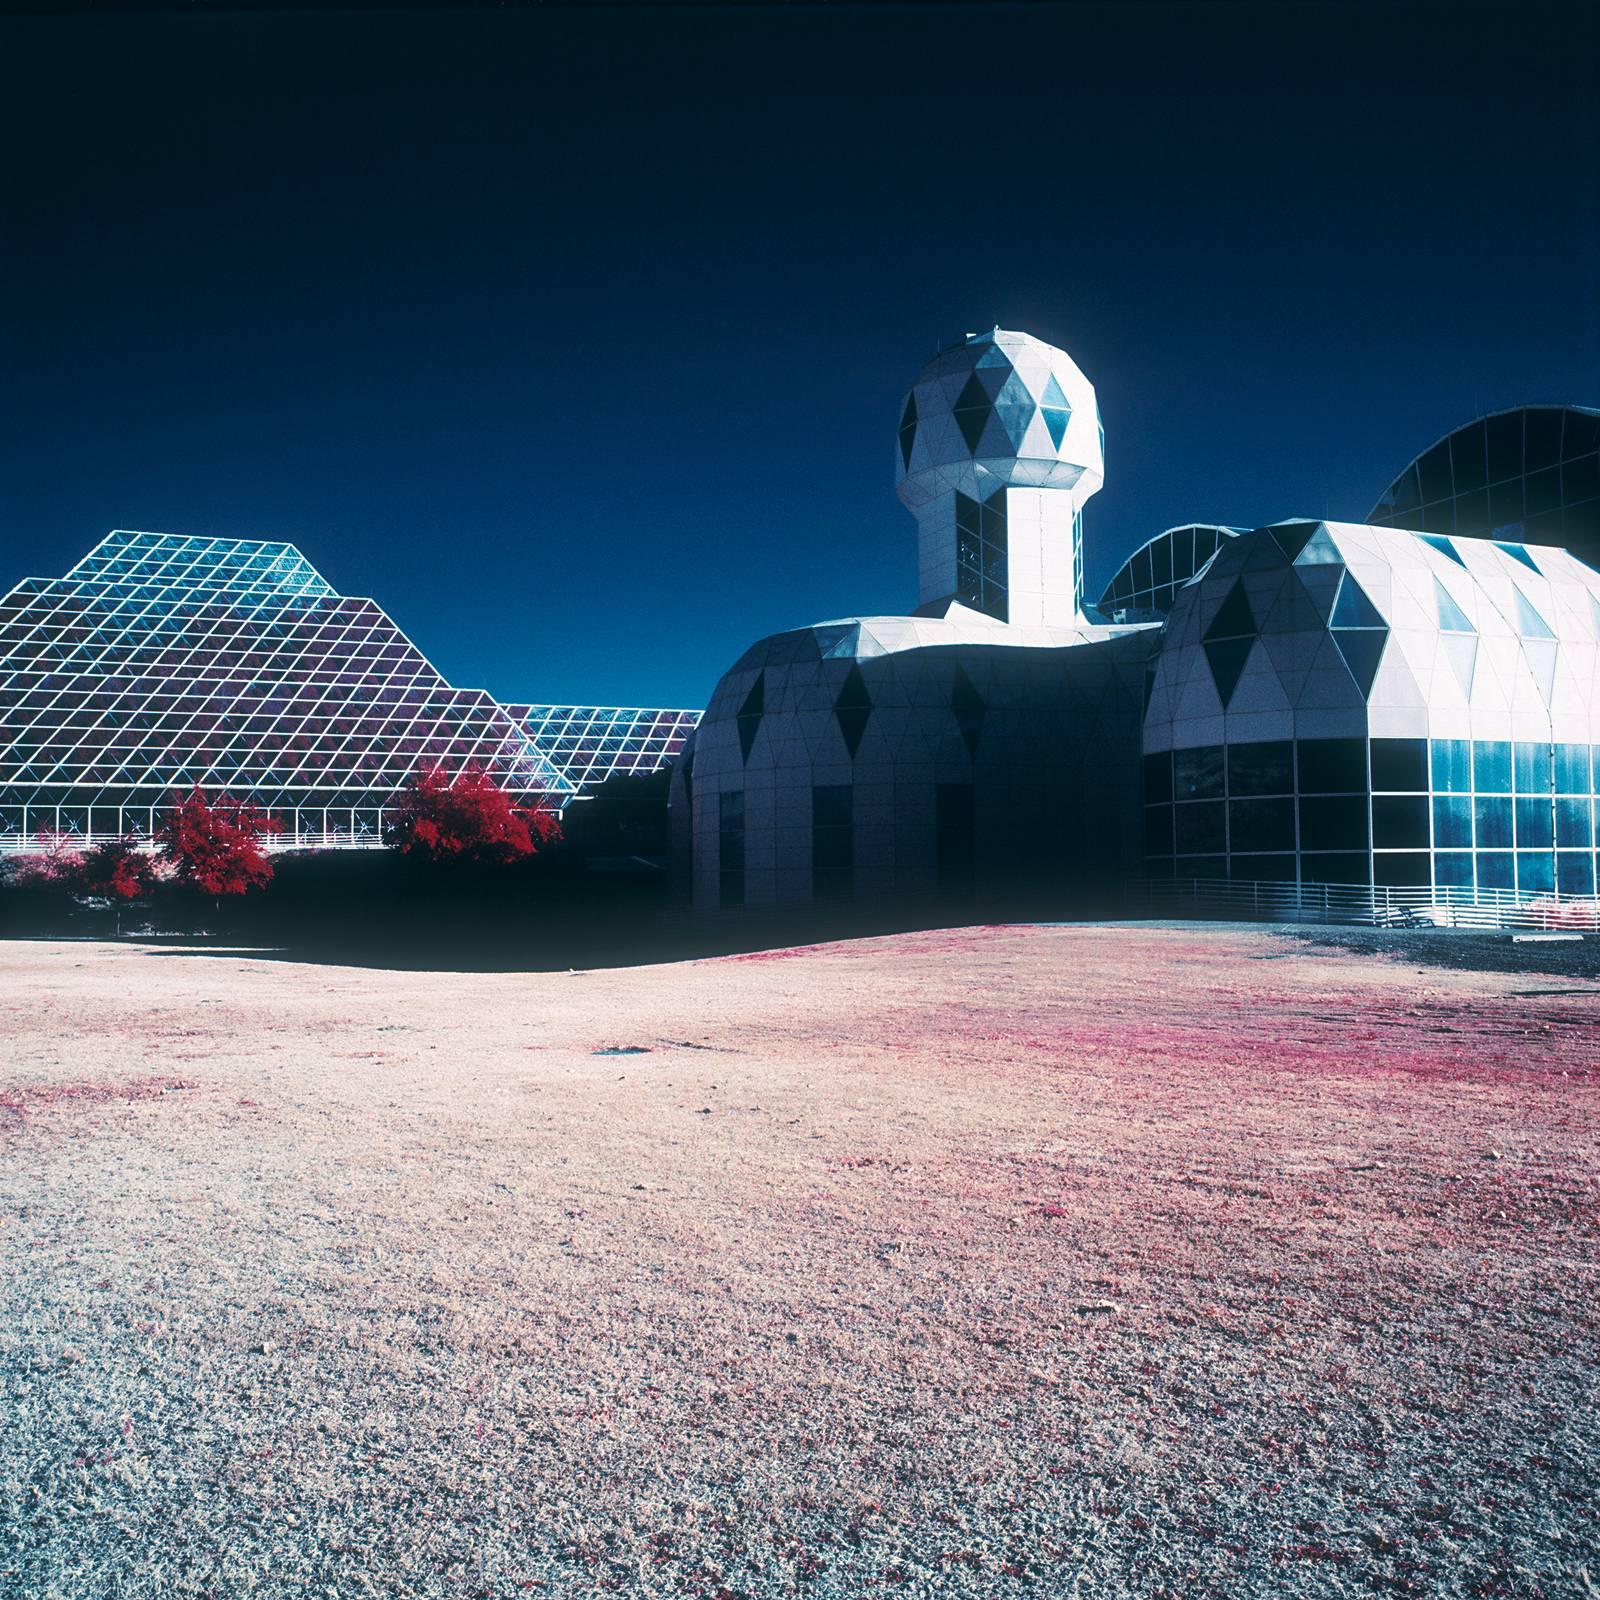 Markus Krottendorfer, Biosphere II (2013) from the series Biosphere II consisting of nine photographies. Dimensions: 39.37